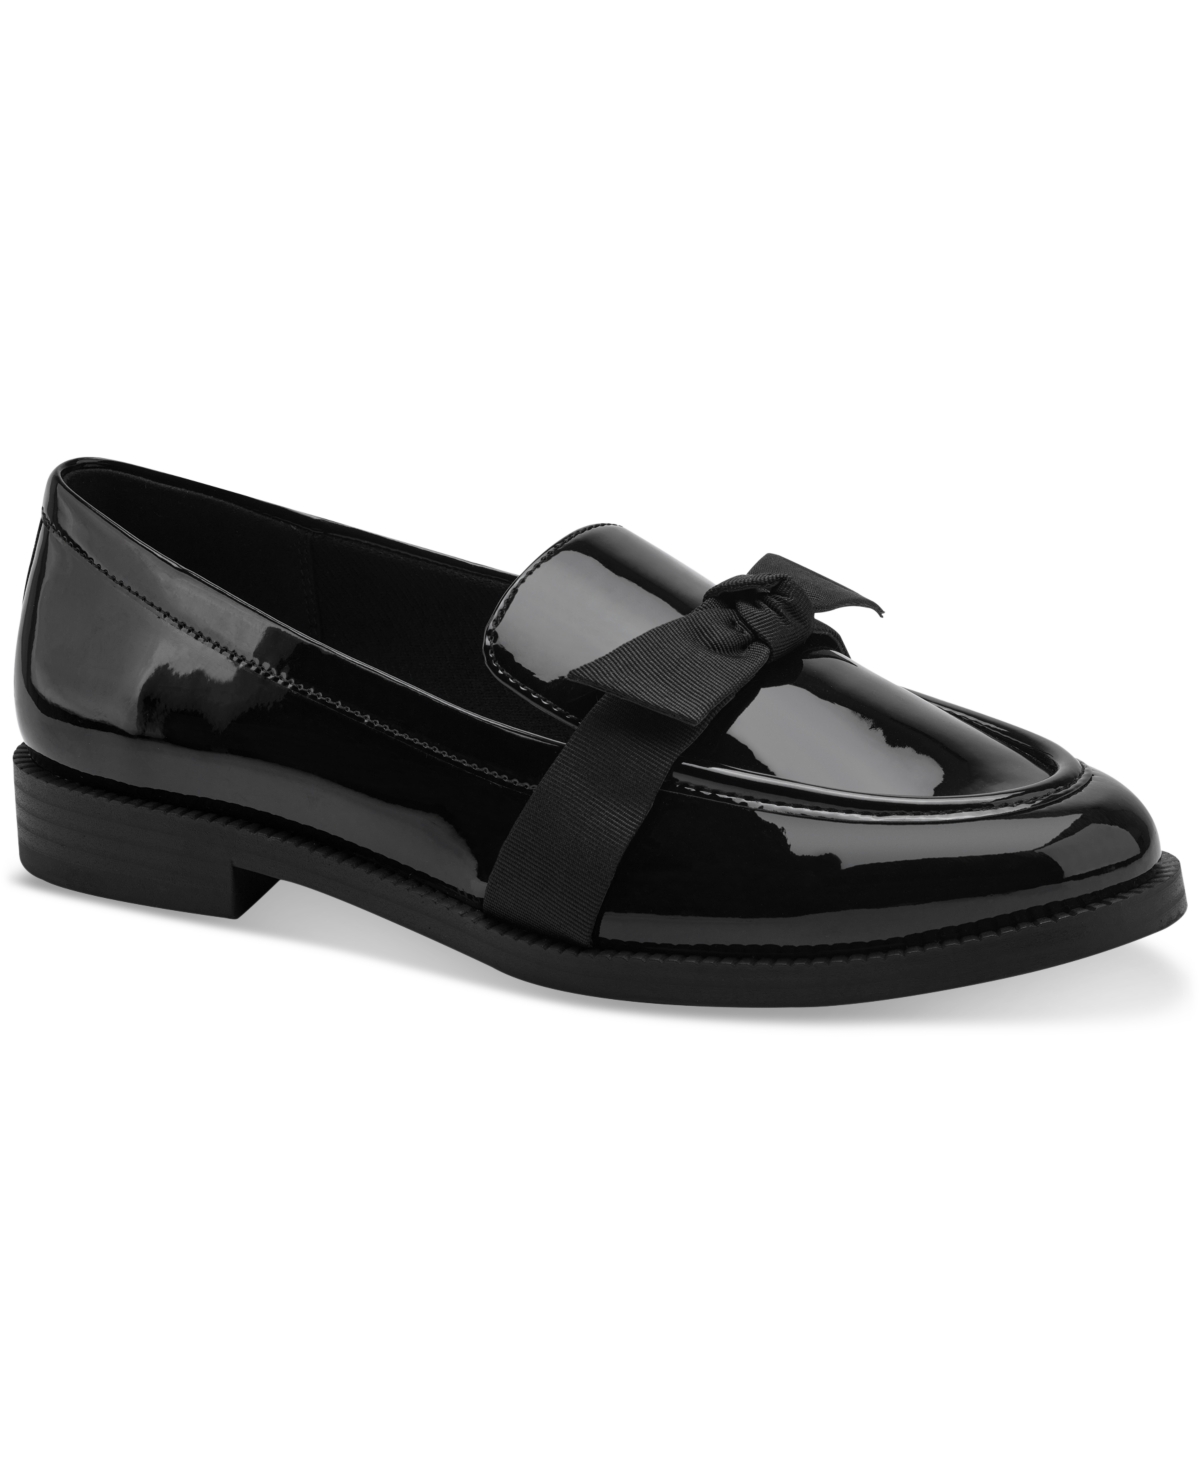 Kasandra Slip-On Loafer Flats, Created for Macy's - Black Patent